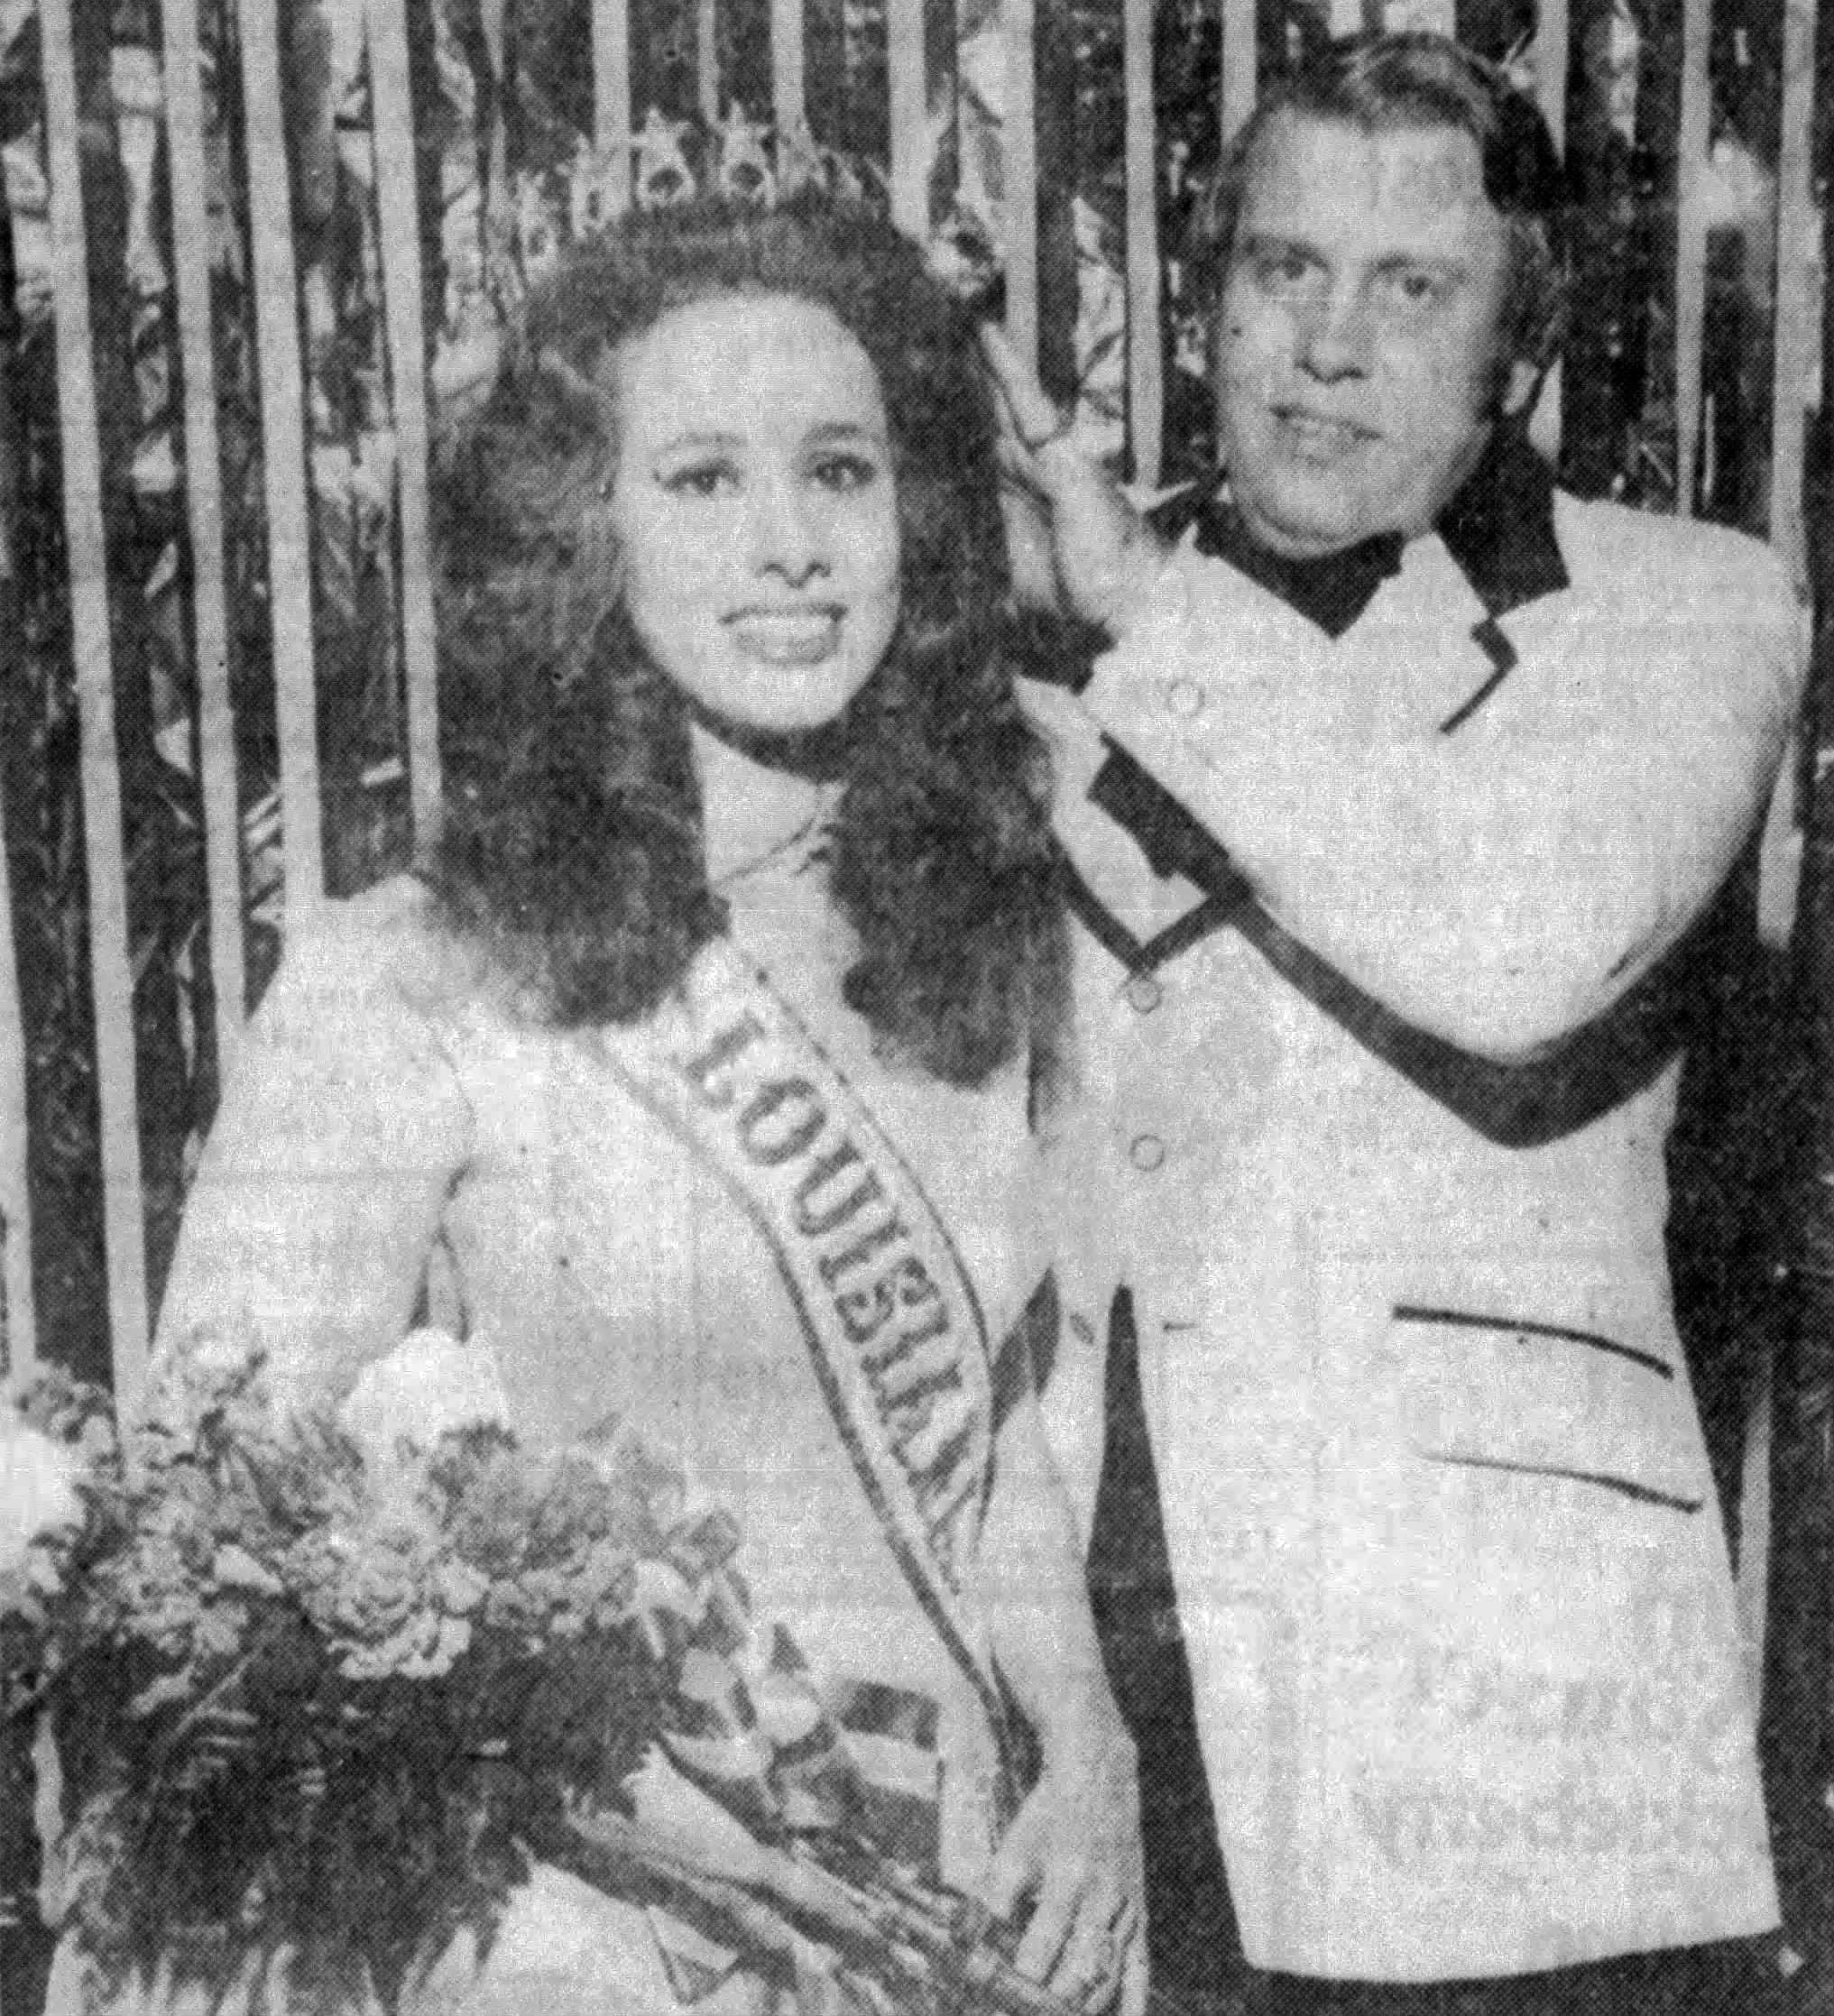 Rhonda Shear is crowned Miss Louisiana USA 1975